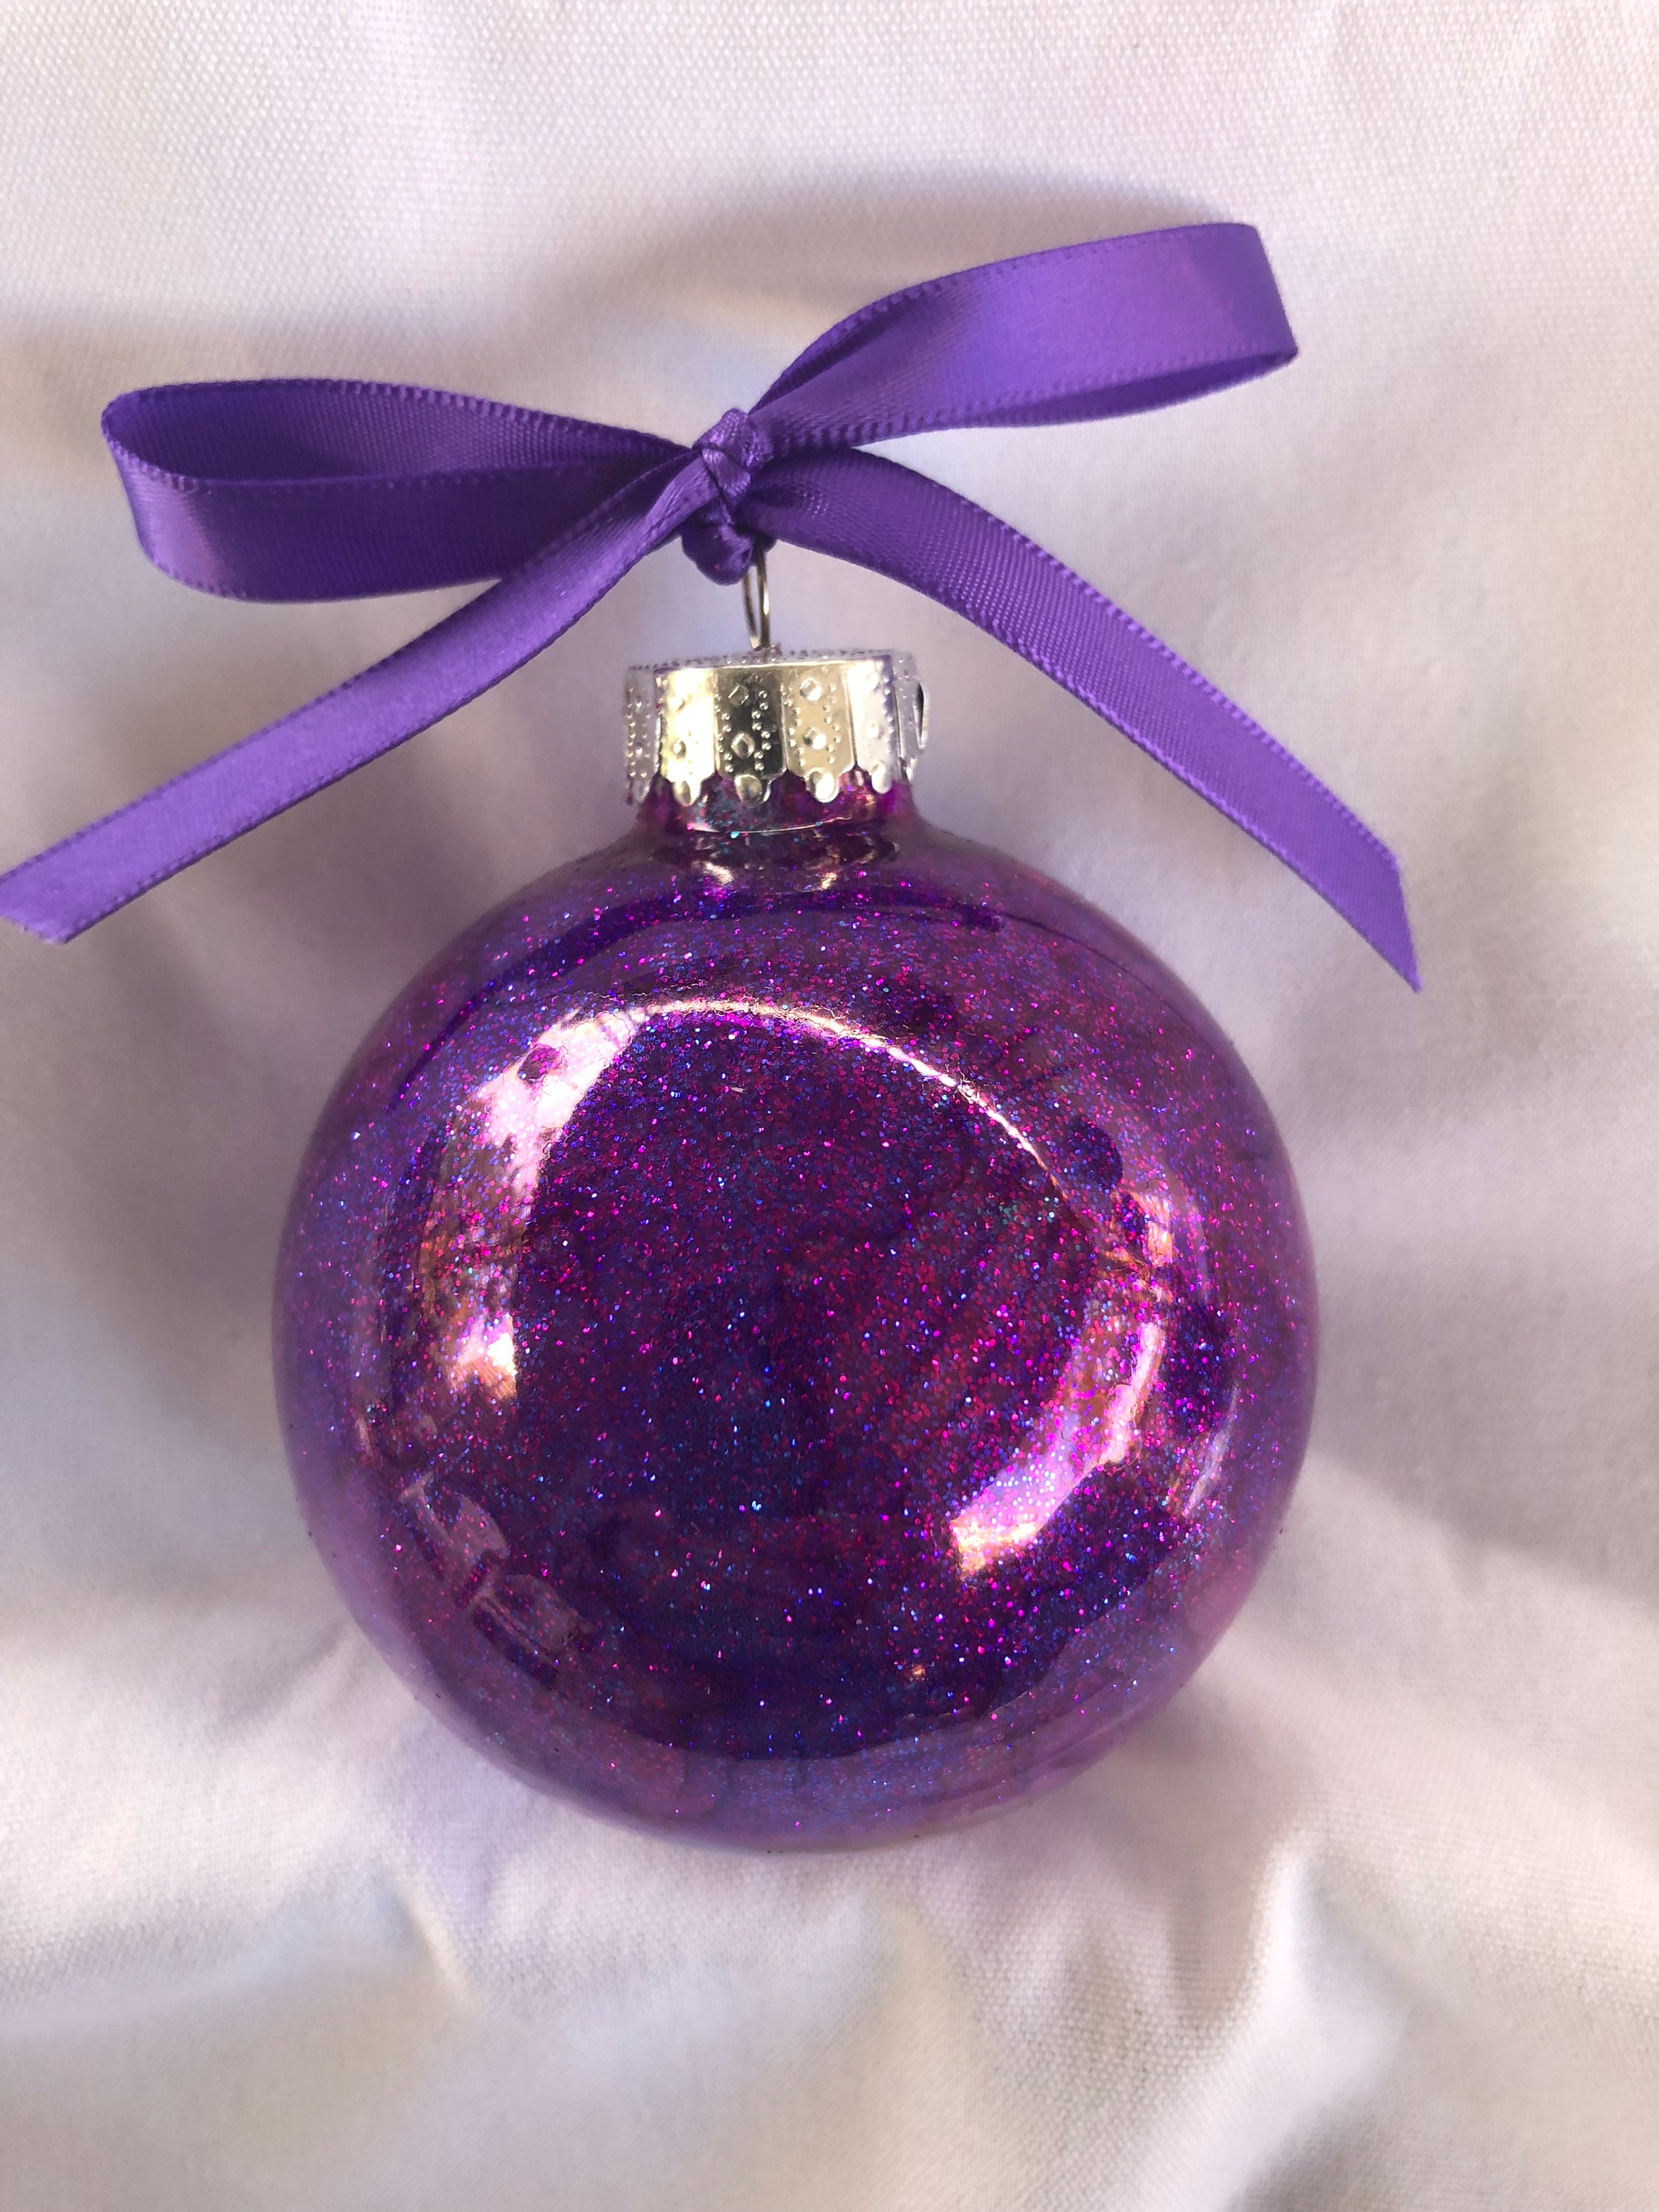 Black Onyx Iridescent Glass Glitter Sparkly Christmas Holiday Ornament 